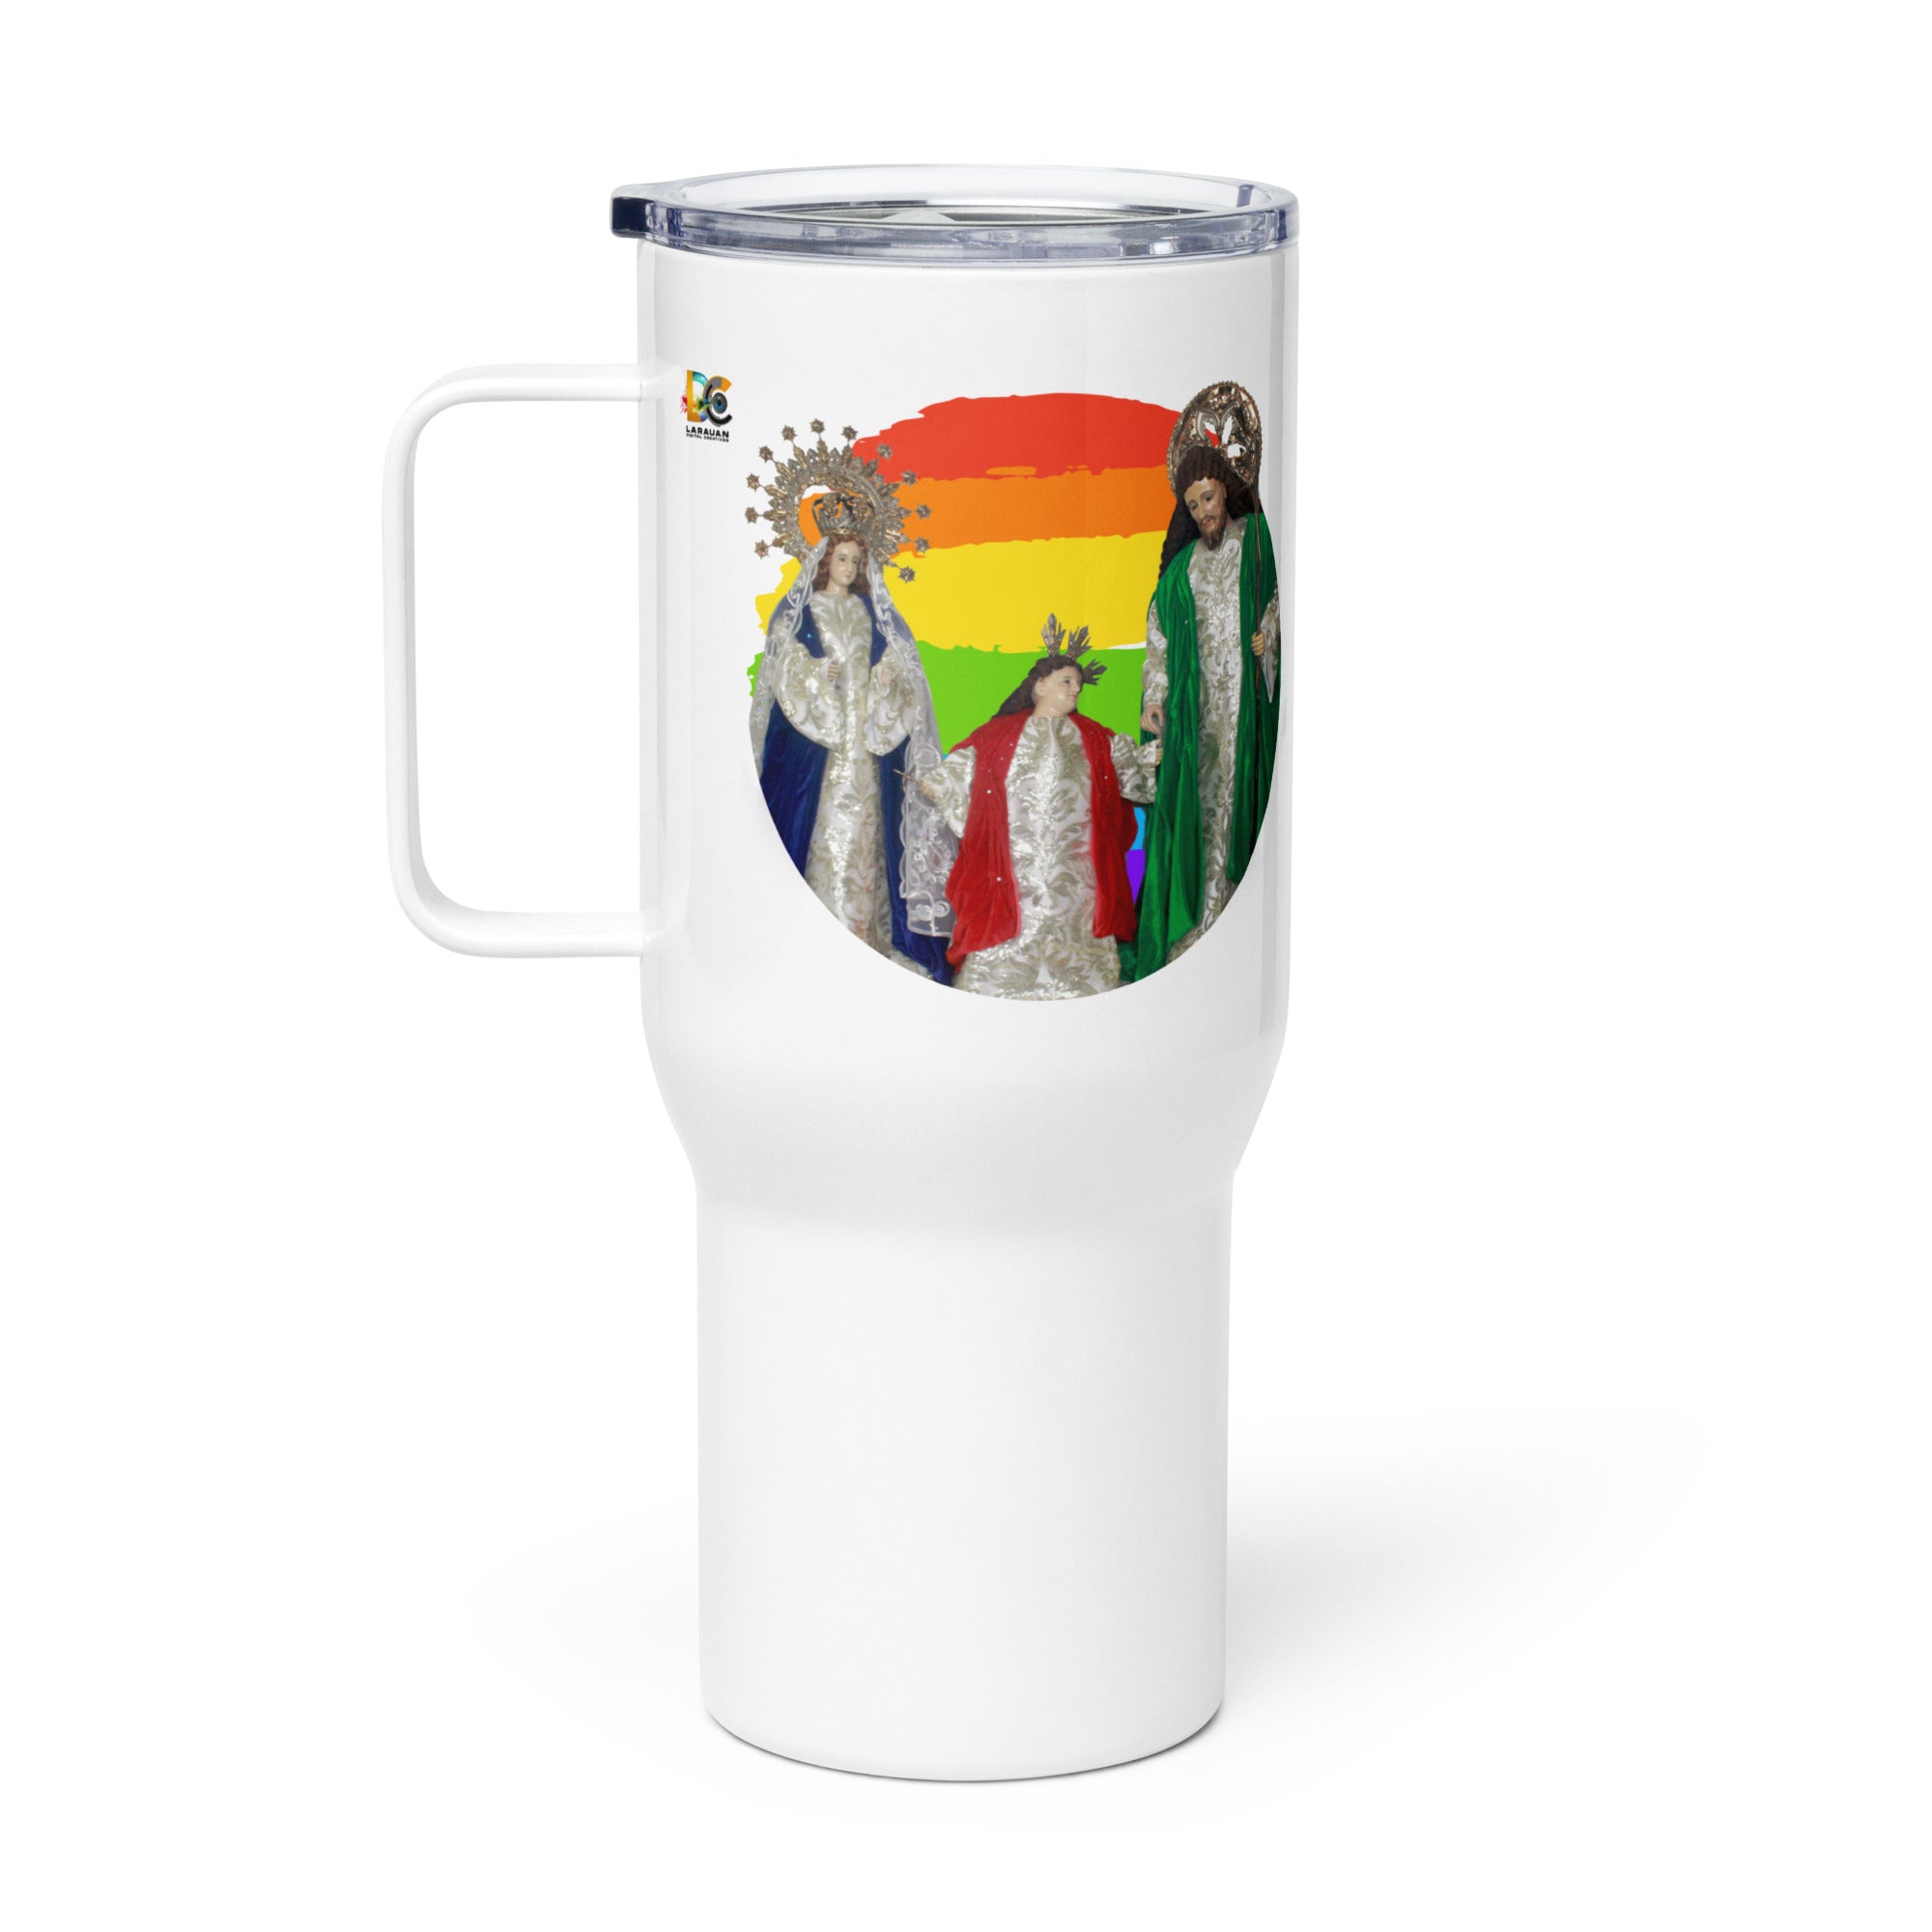 Sagrada Familia Travel mug with a handle